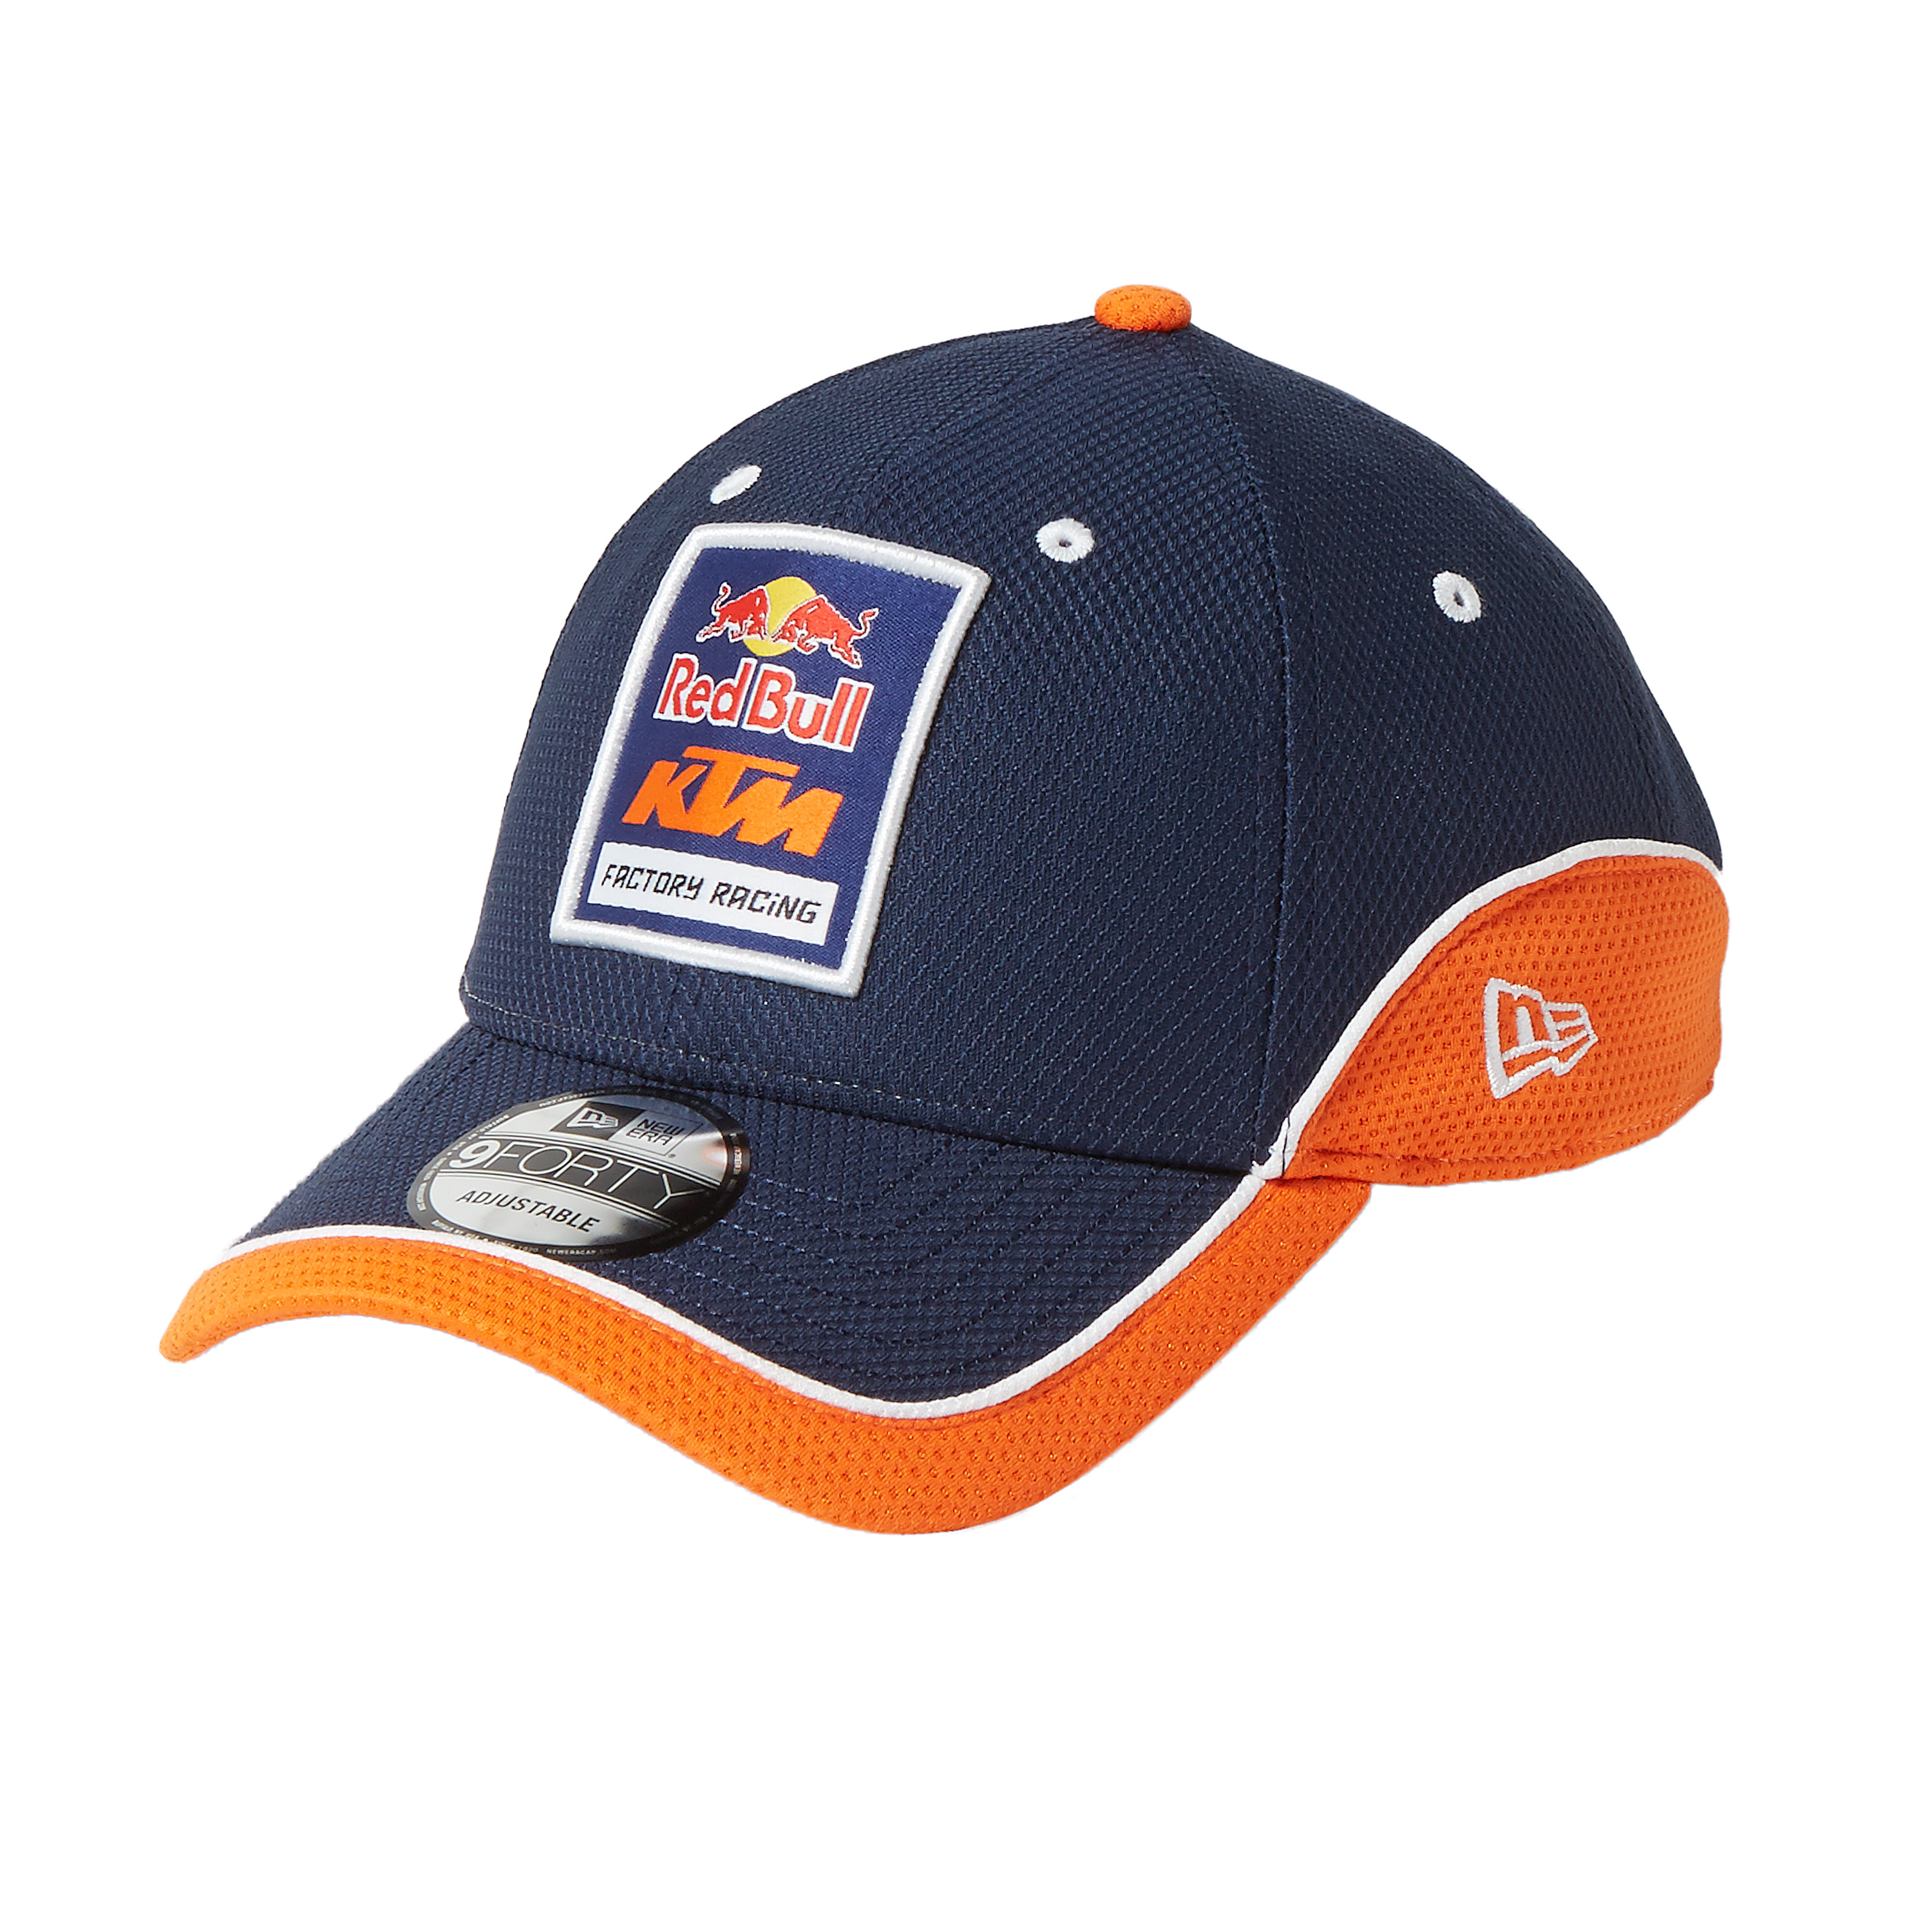 Main image of Red Bull KTM Factory Racing Diamond Mesh Hat